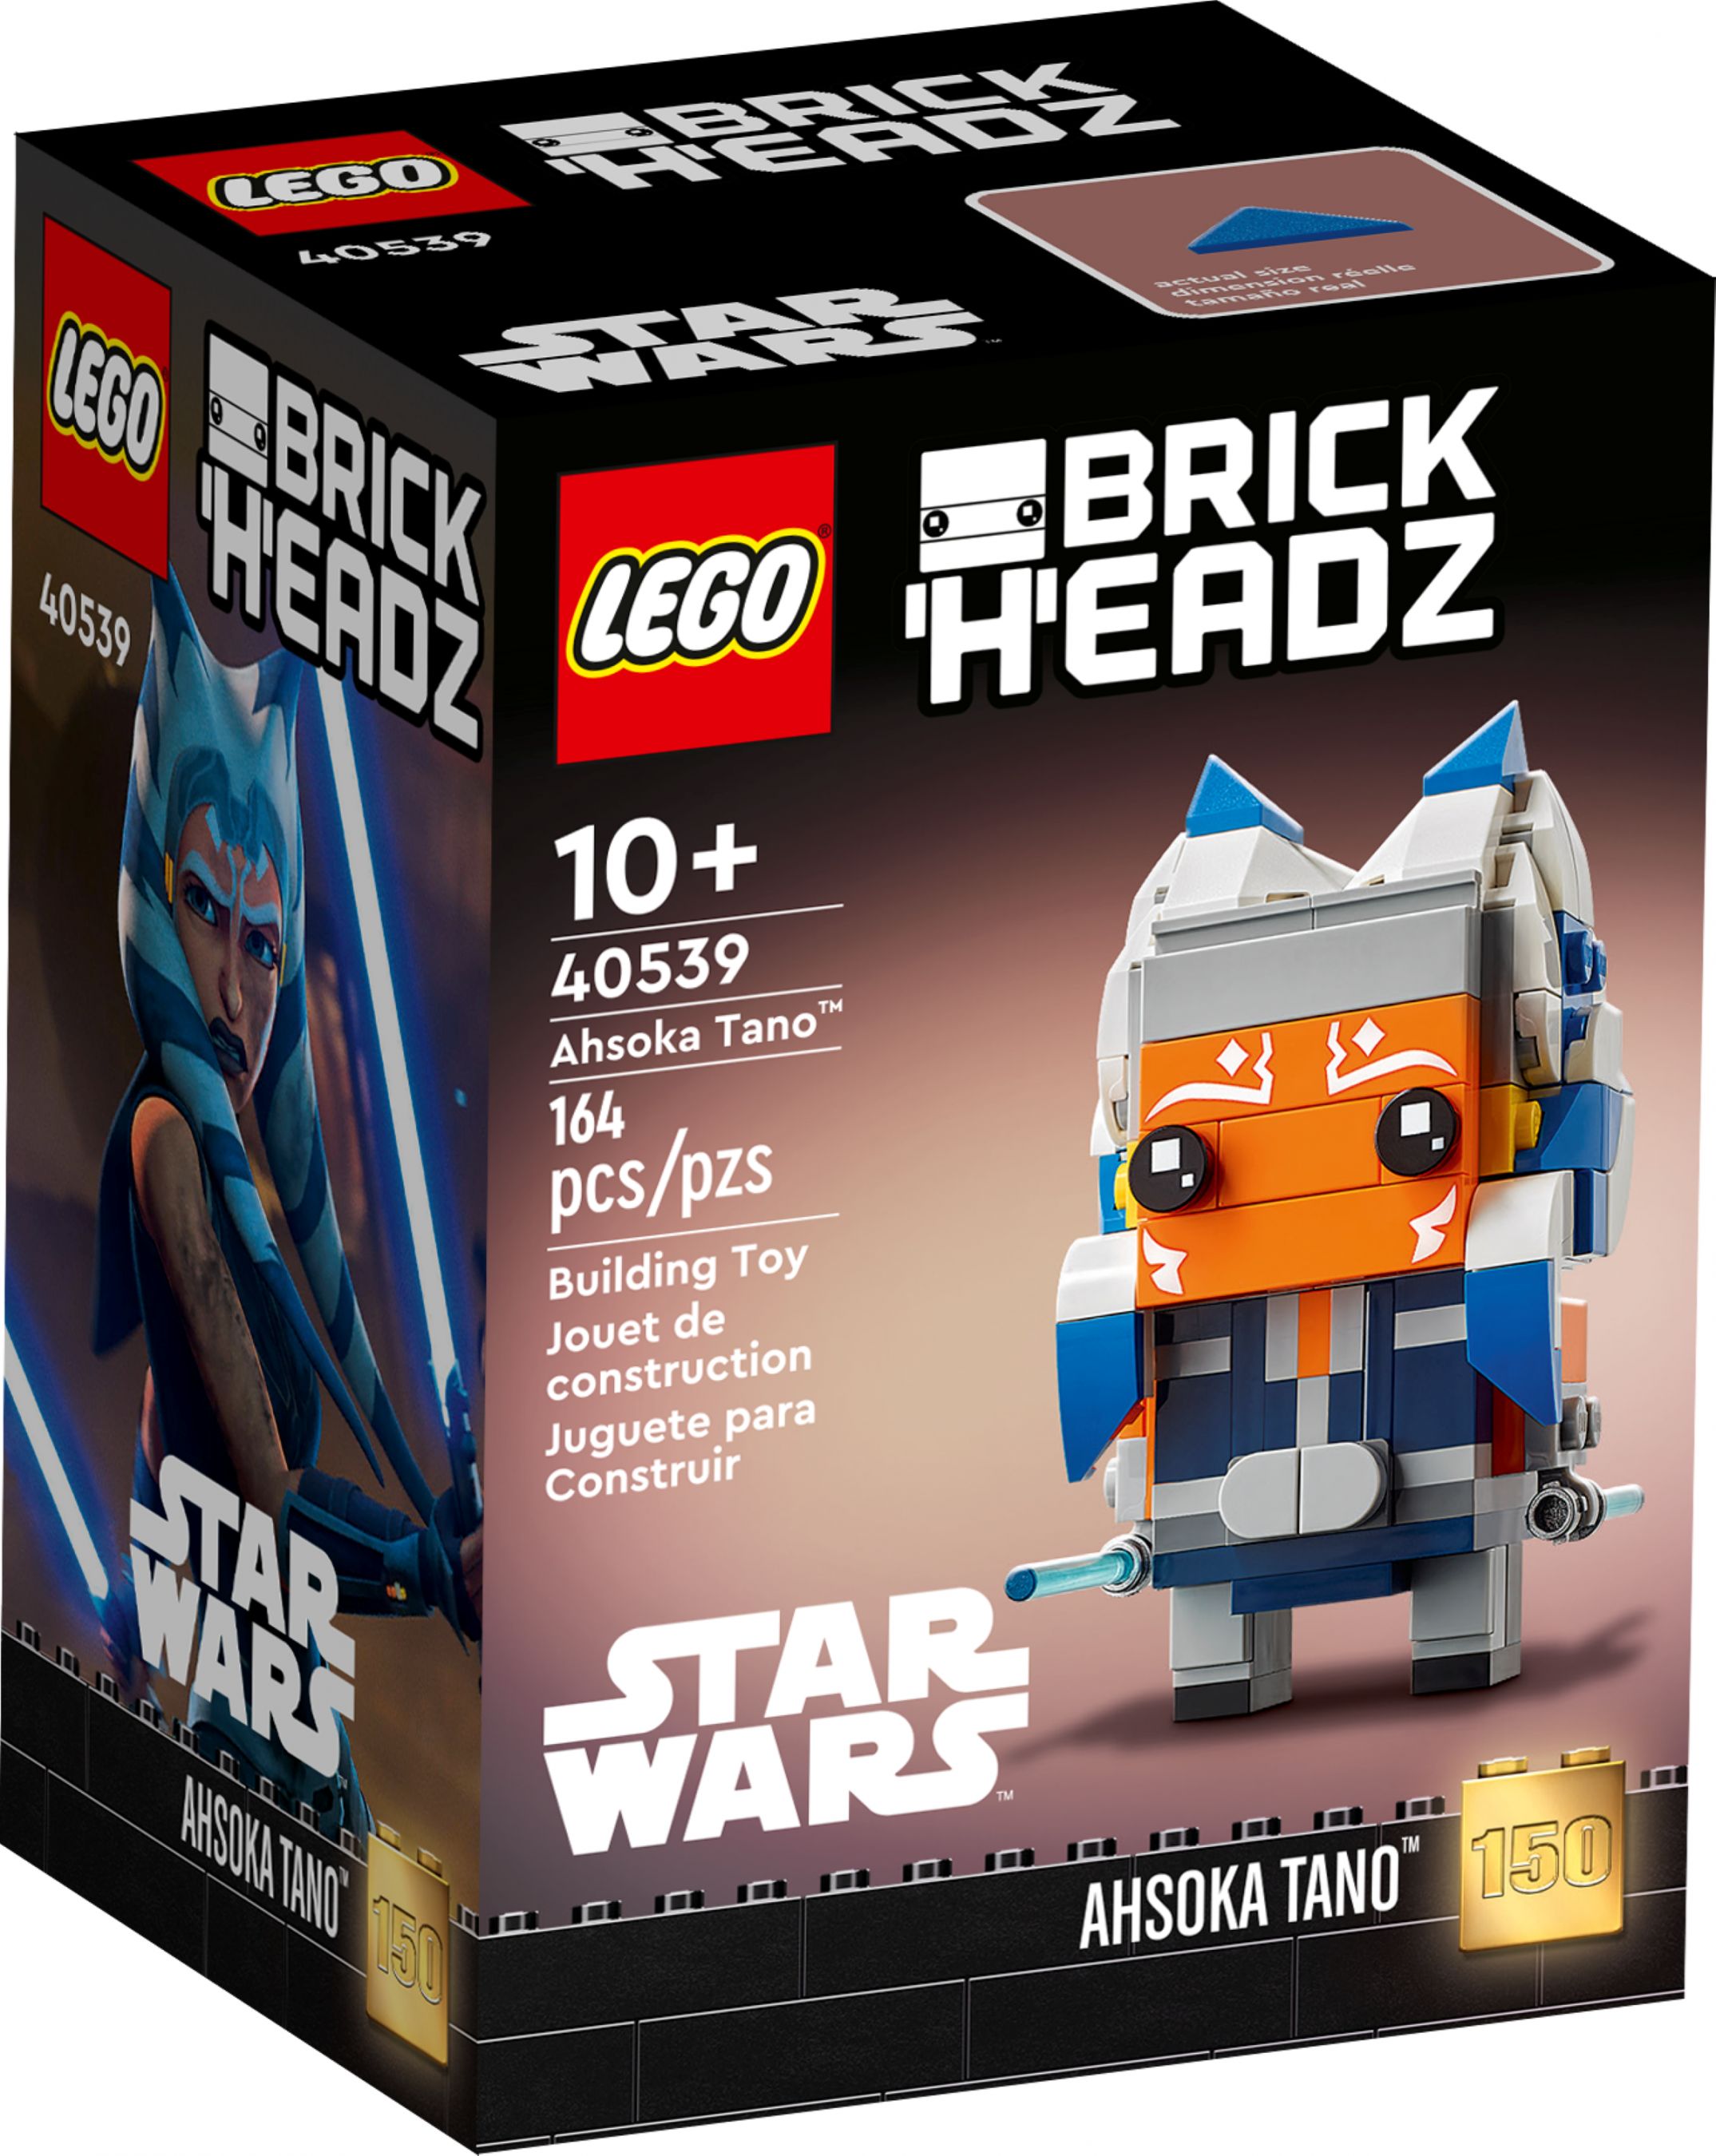 LEGO BrickHeadz 40539 Ahsoka Tano™ LEGO_40539_alt1.jpg